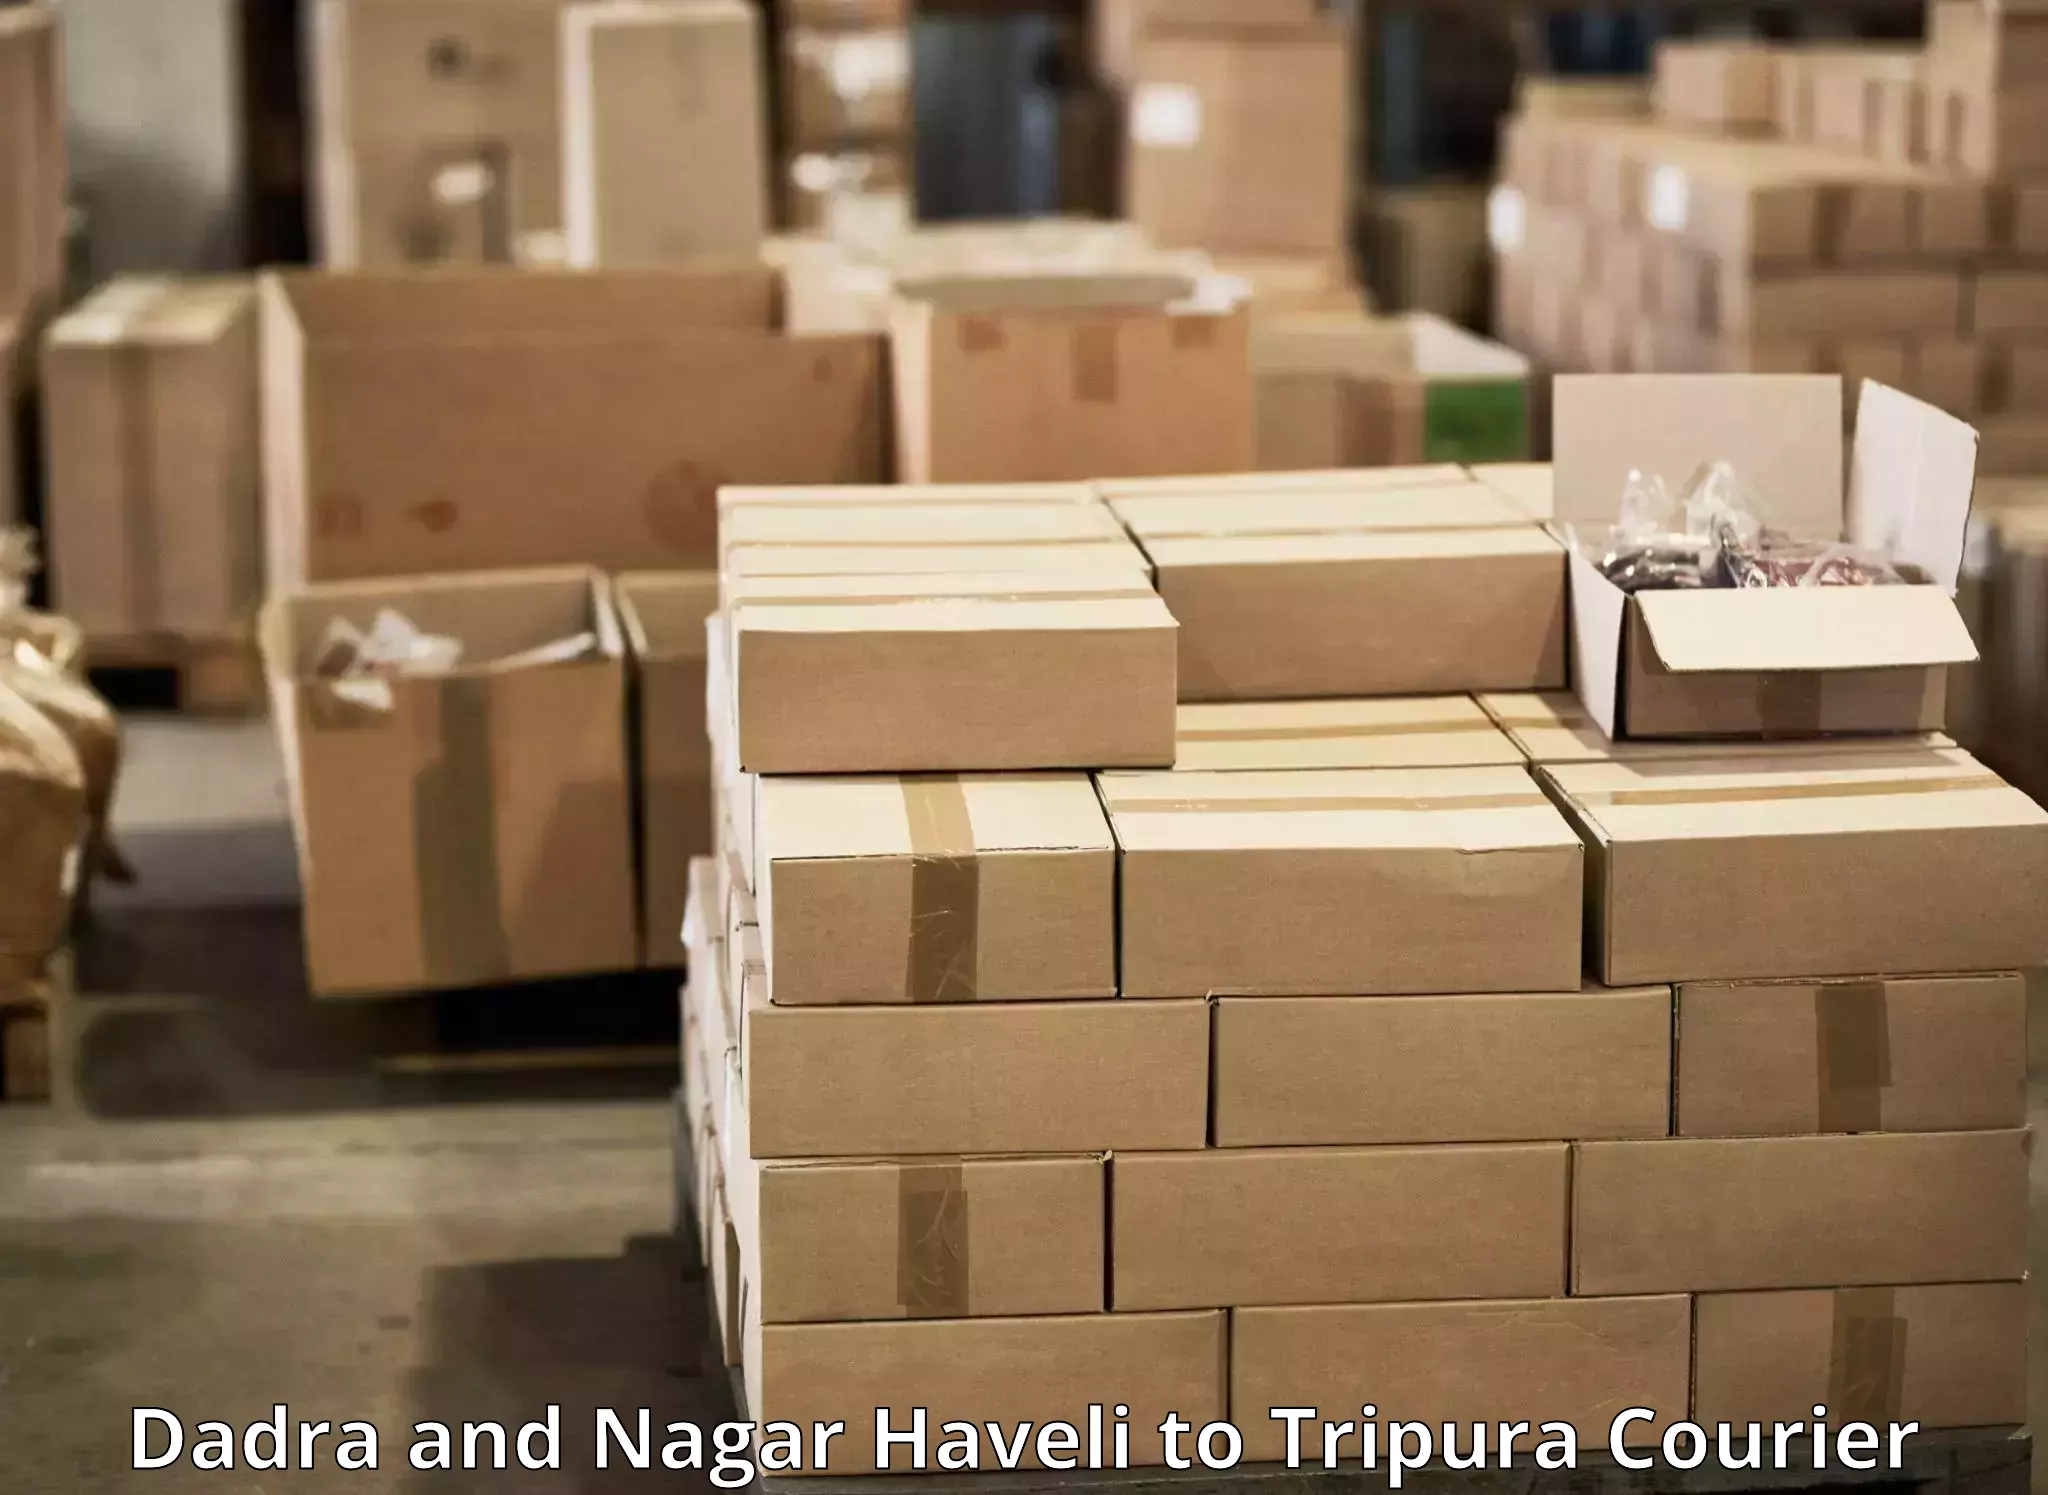 Advanced shipping network Dadra and Nagar Haveli to Udaipur Tripura